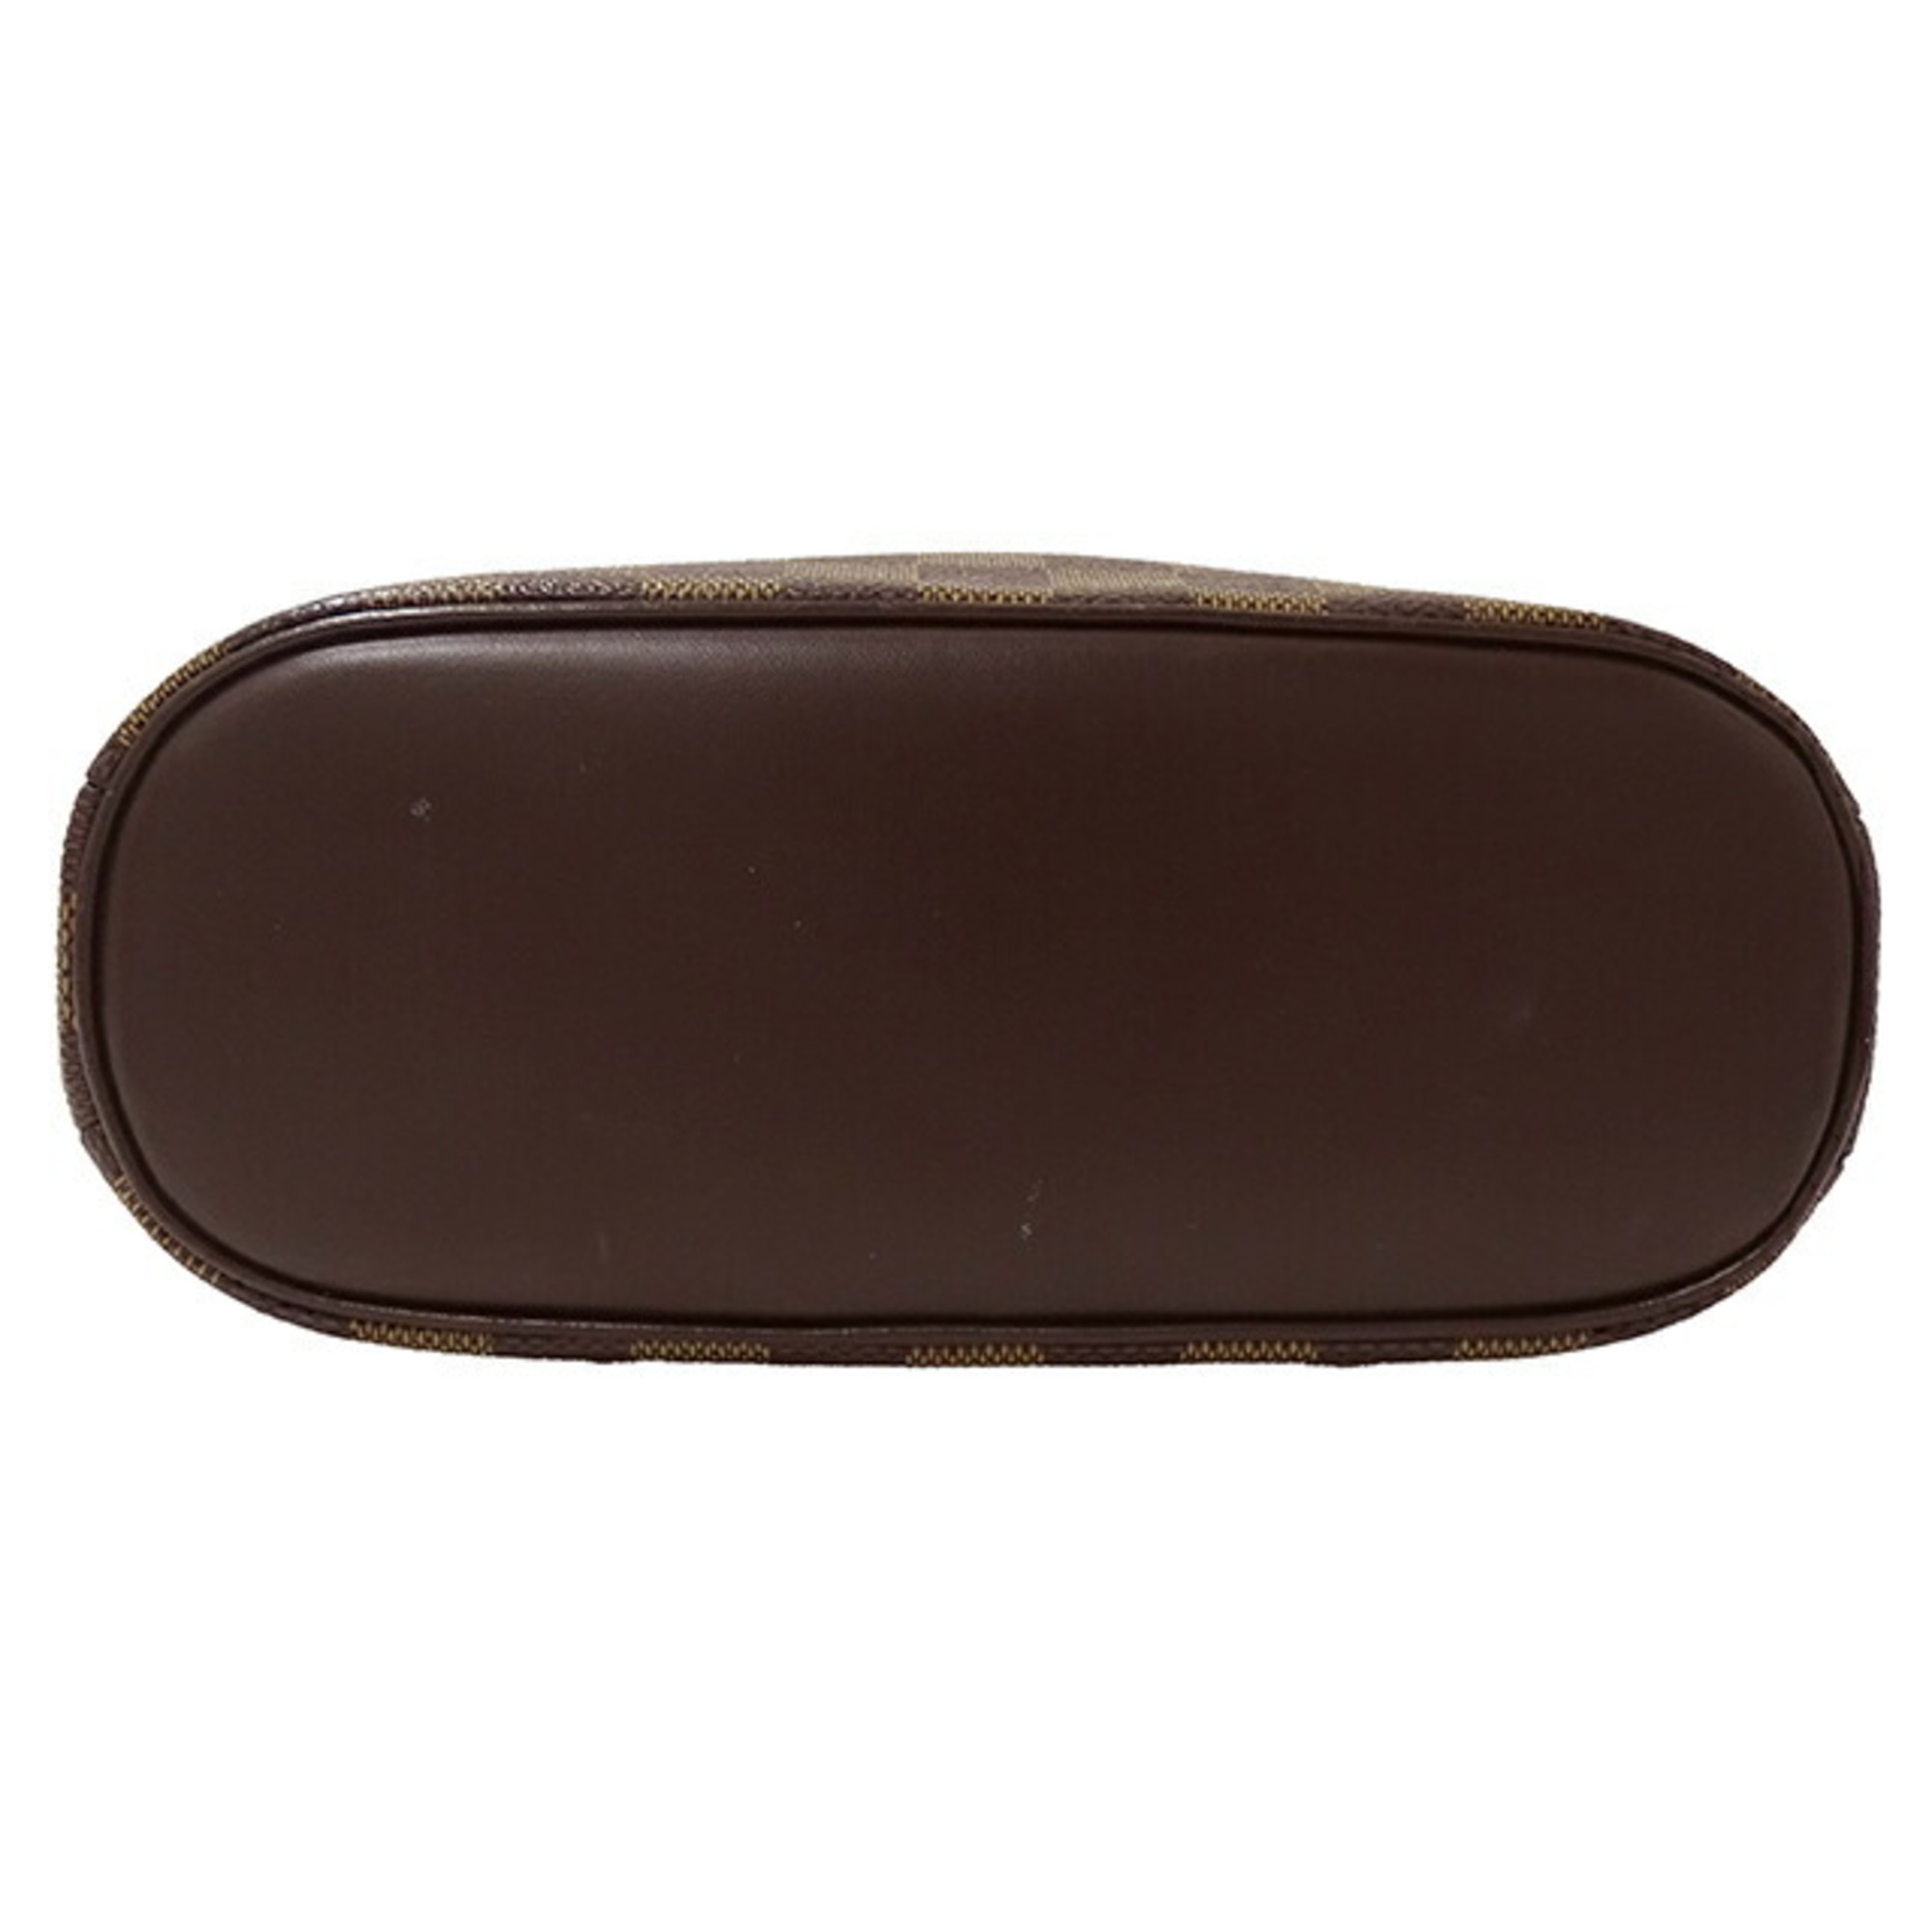 Louis Vuitton Damier Women's Handbag Saria Brown N51286 Compact for Outings